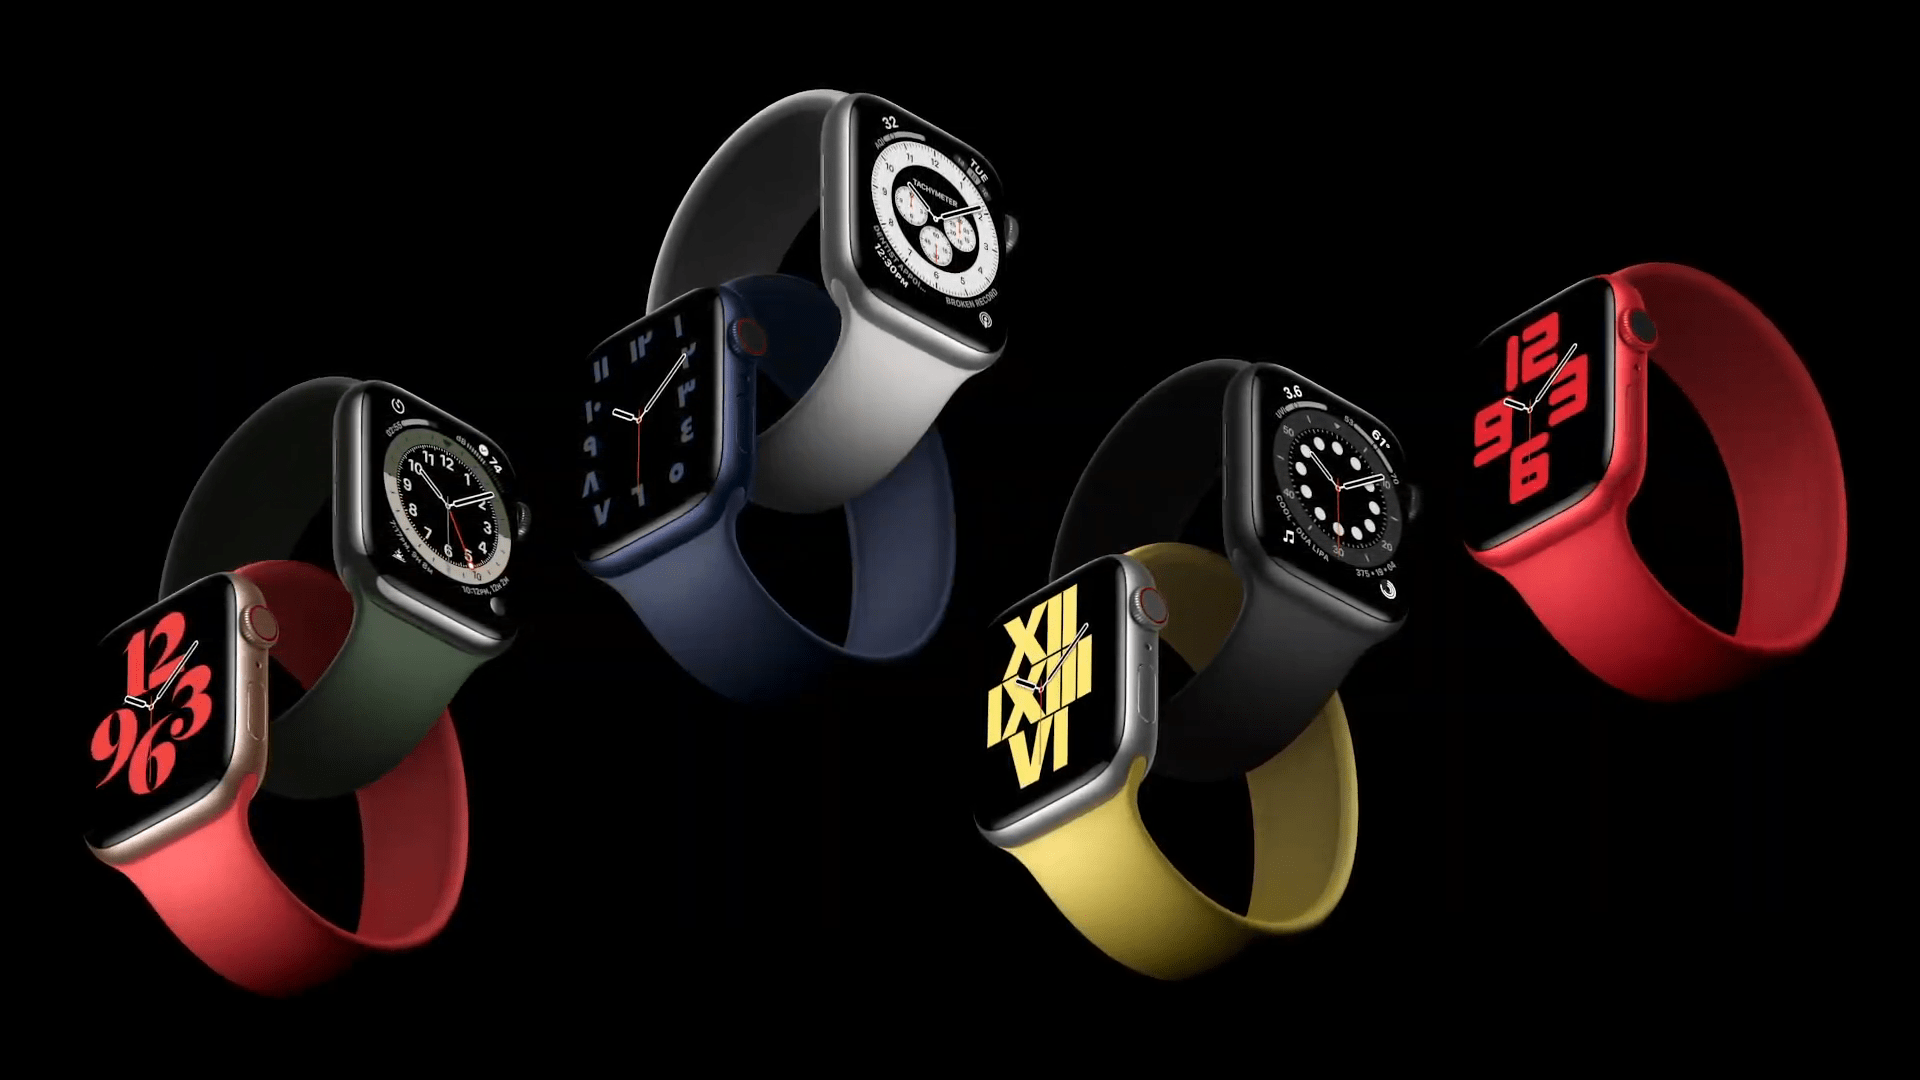 б/у Apple Watch SE